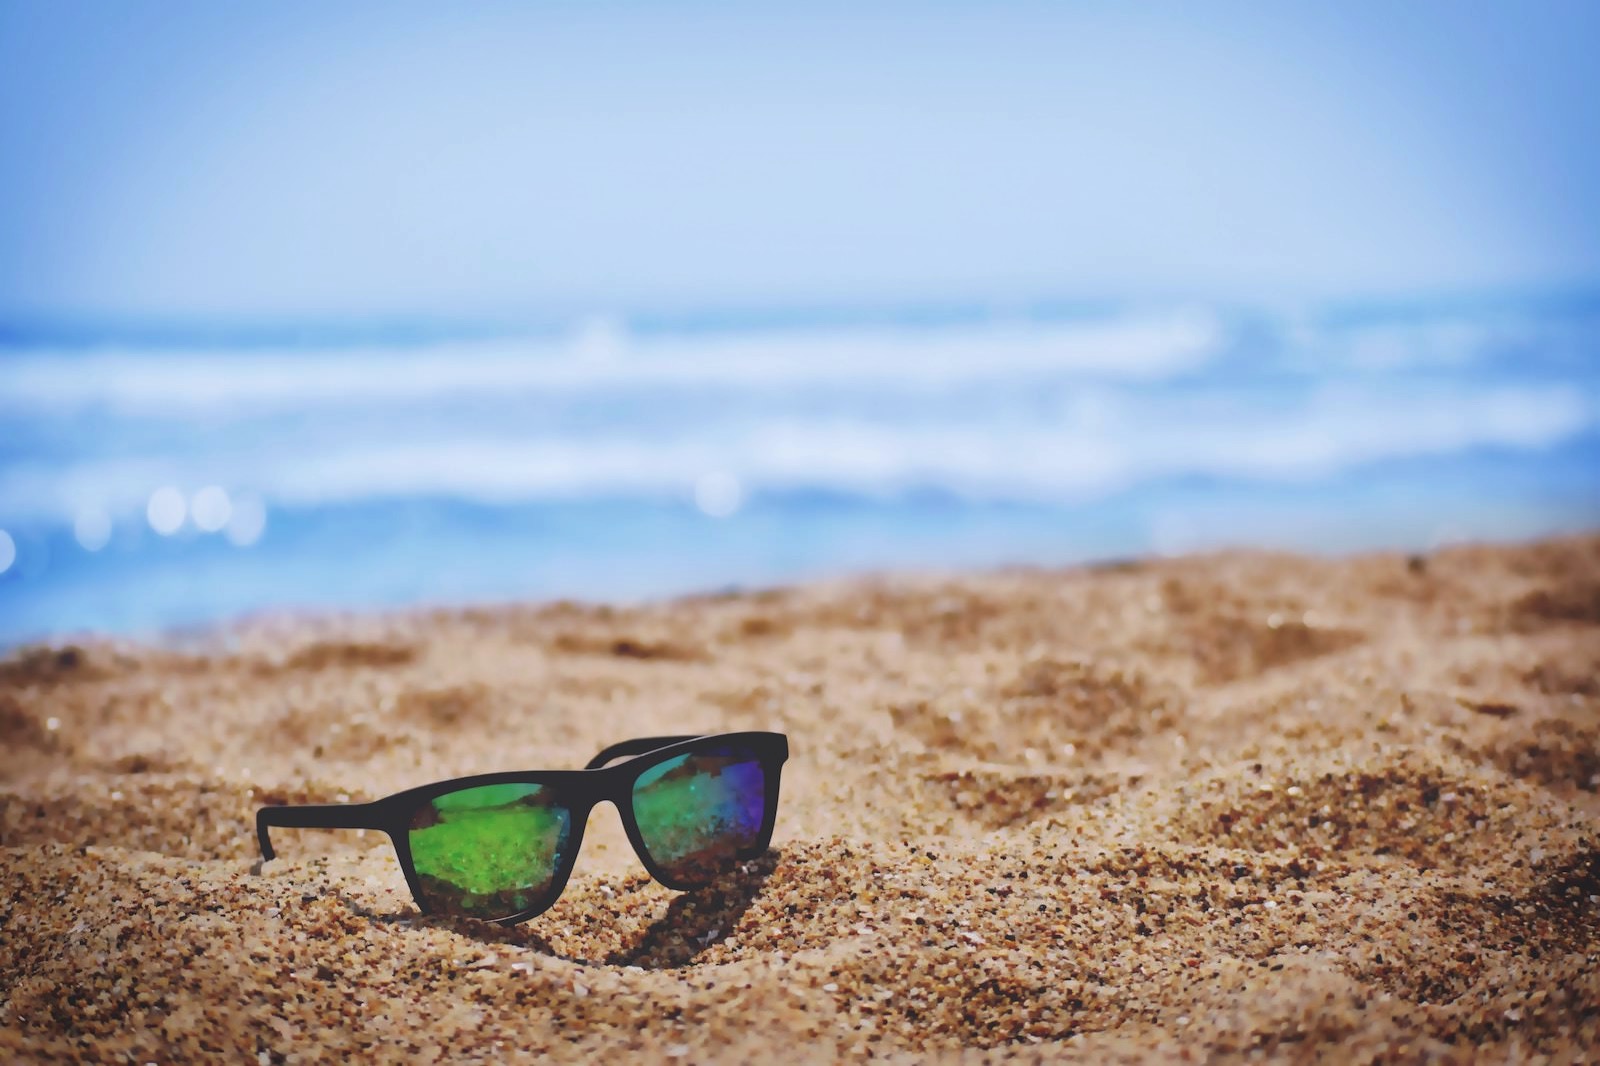 sai-kiran-anagani-209542-unsplash-beach-and-sunglasses.jpg